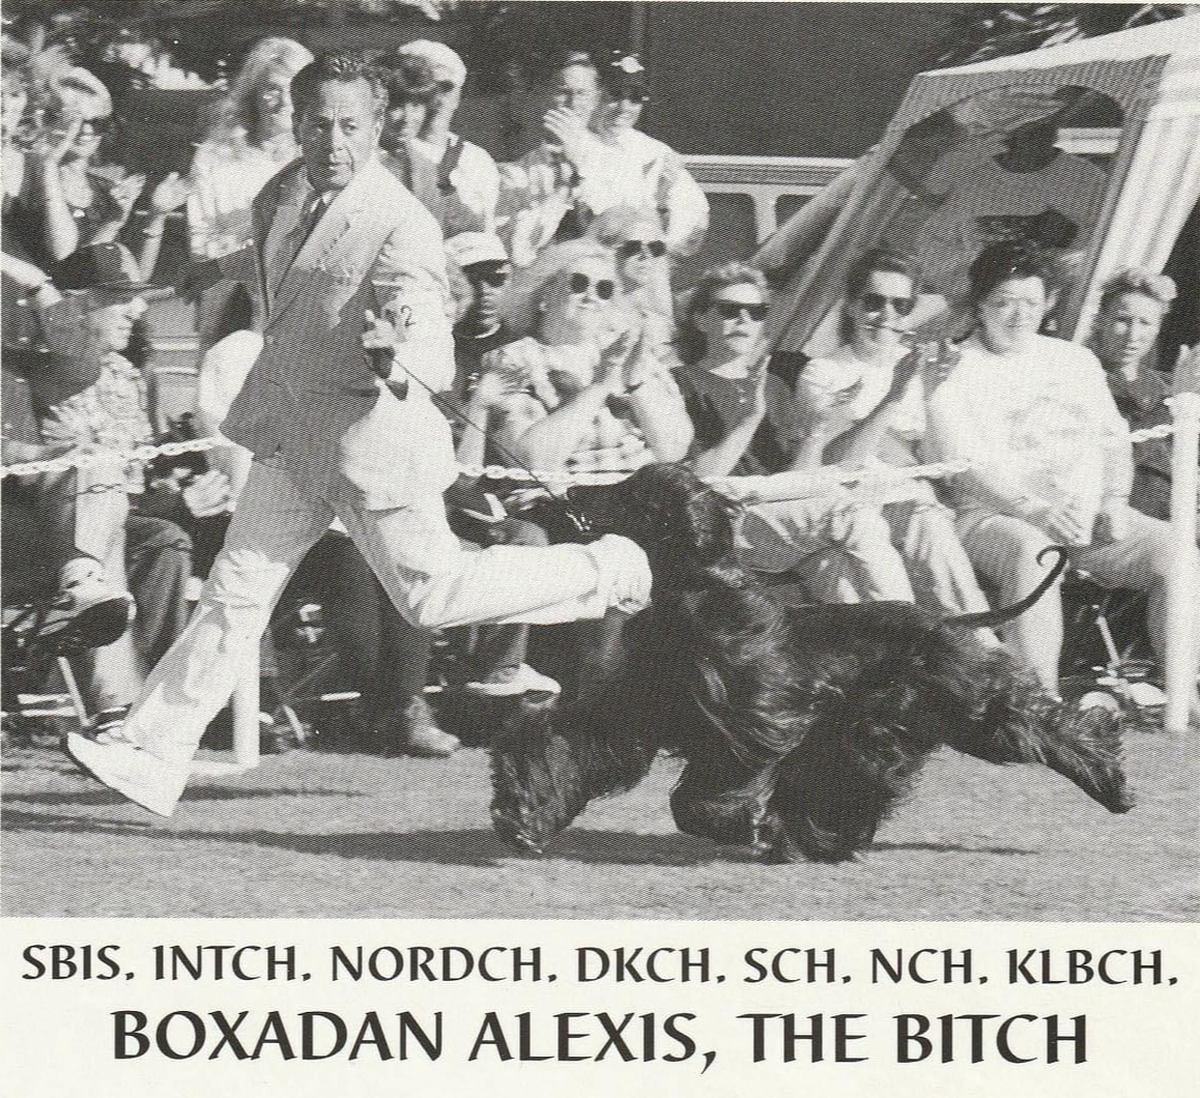 Image of Boxadan Alexis the Bitch